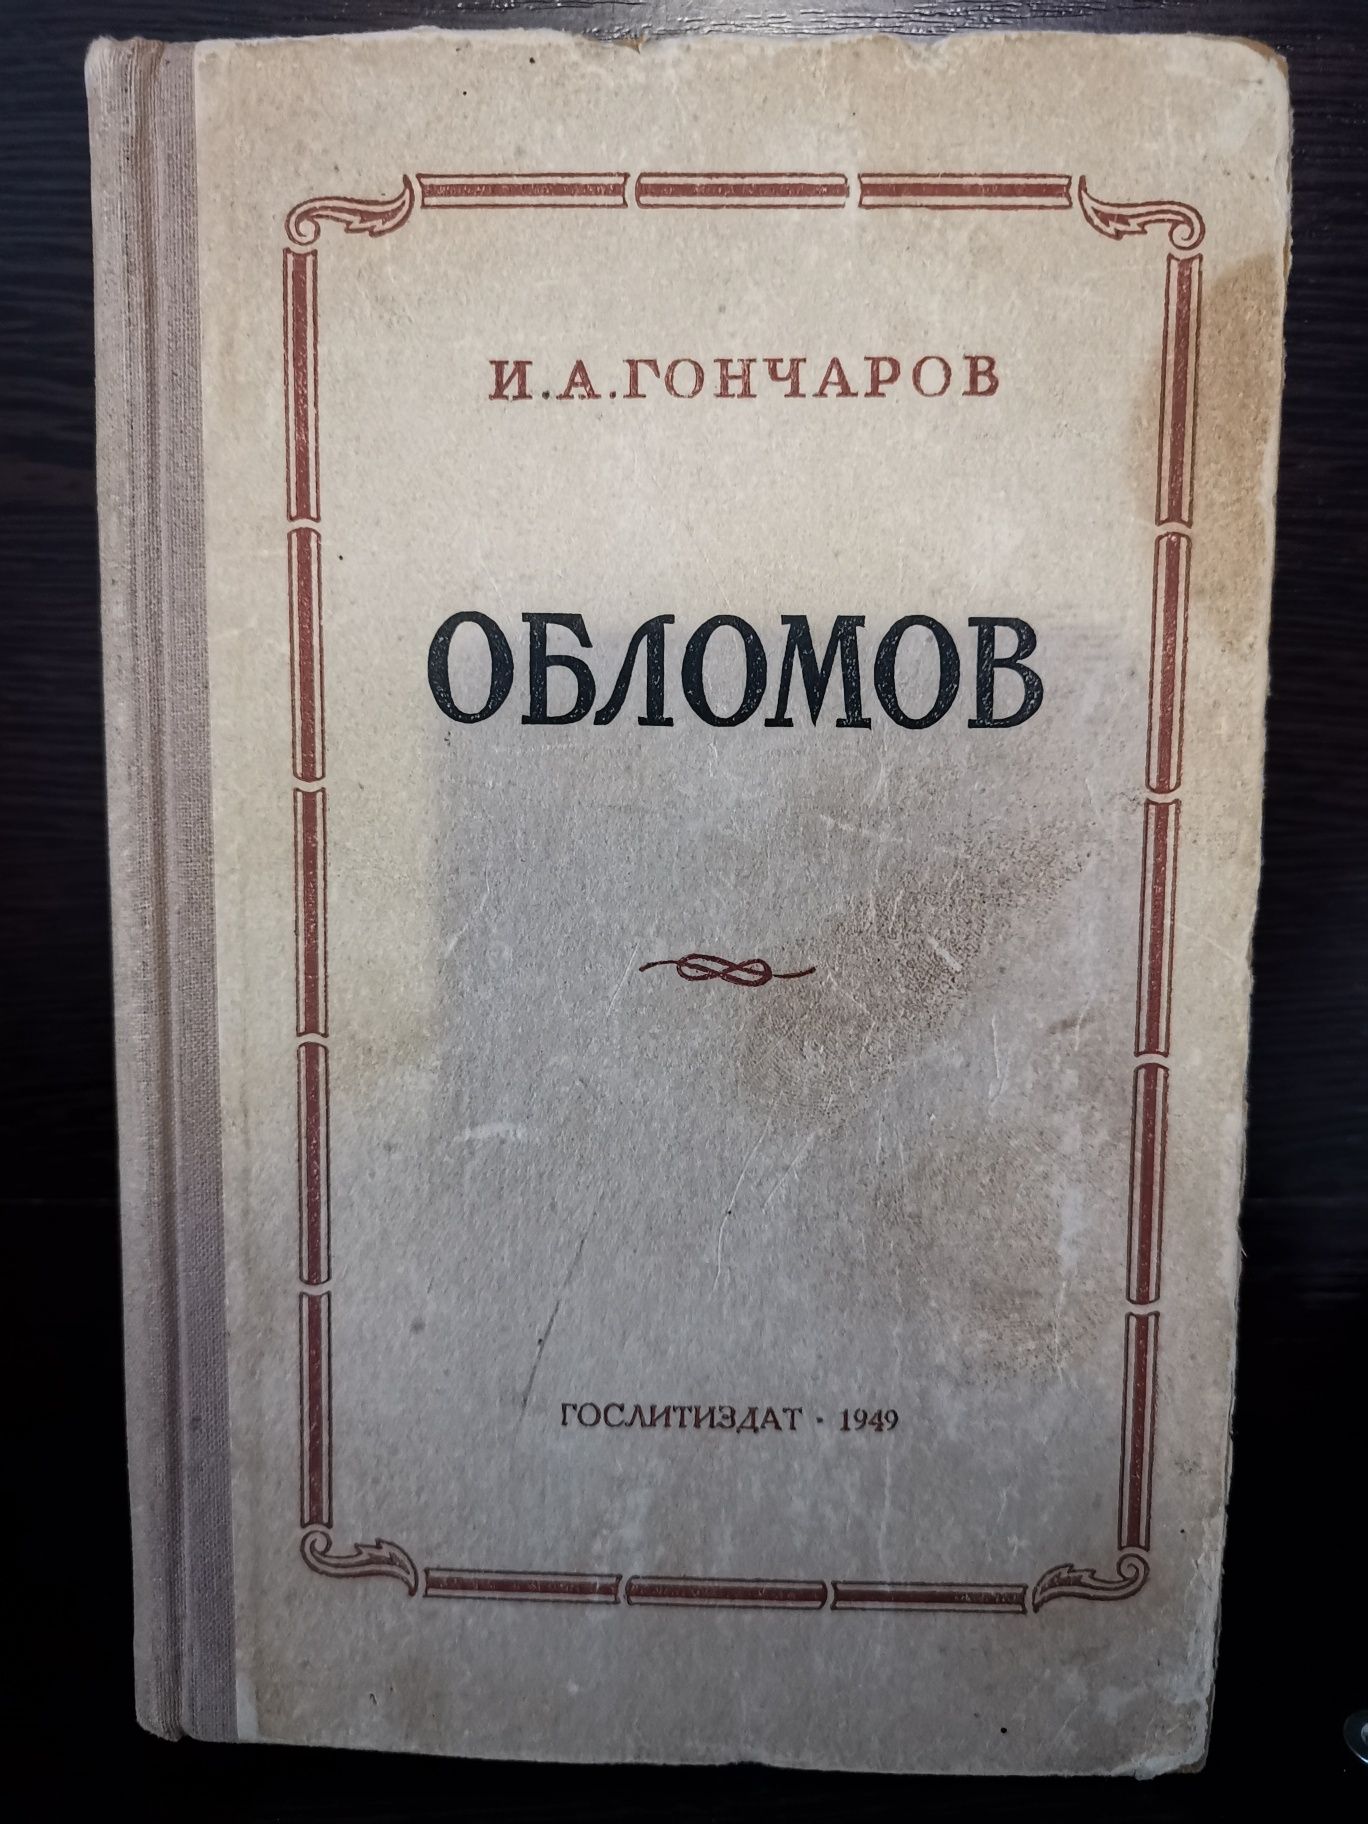 Книги И. А. Гончарова